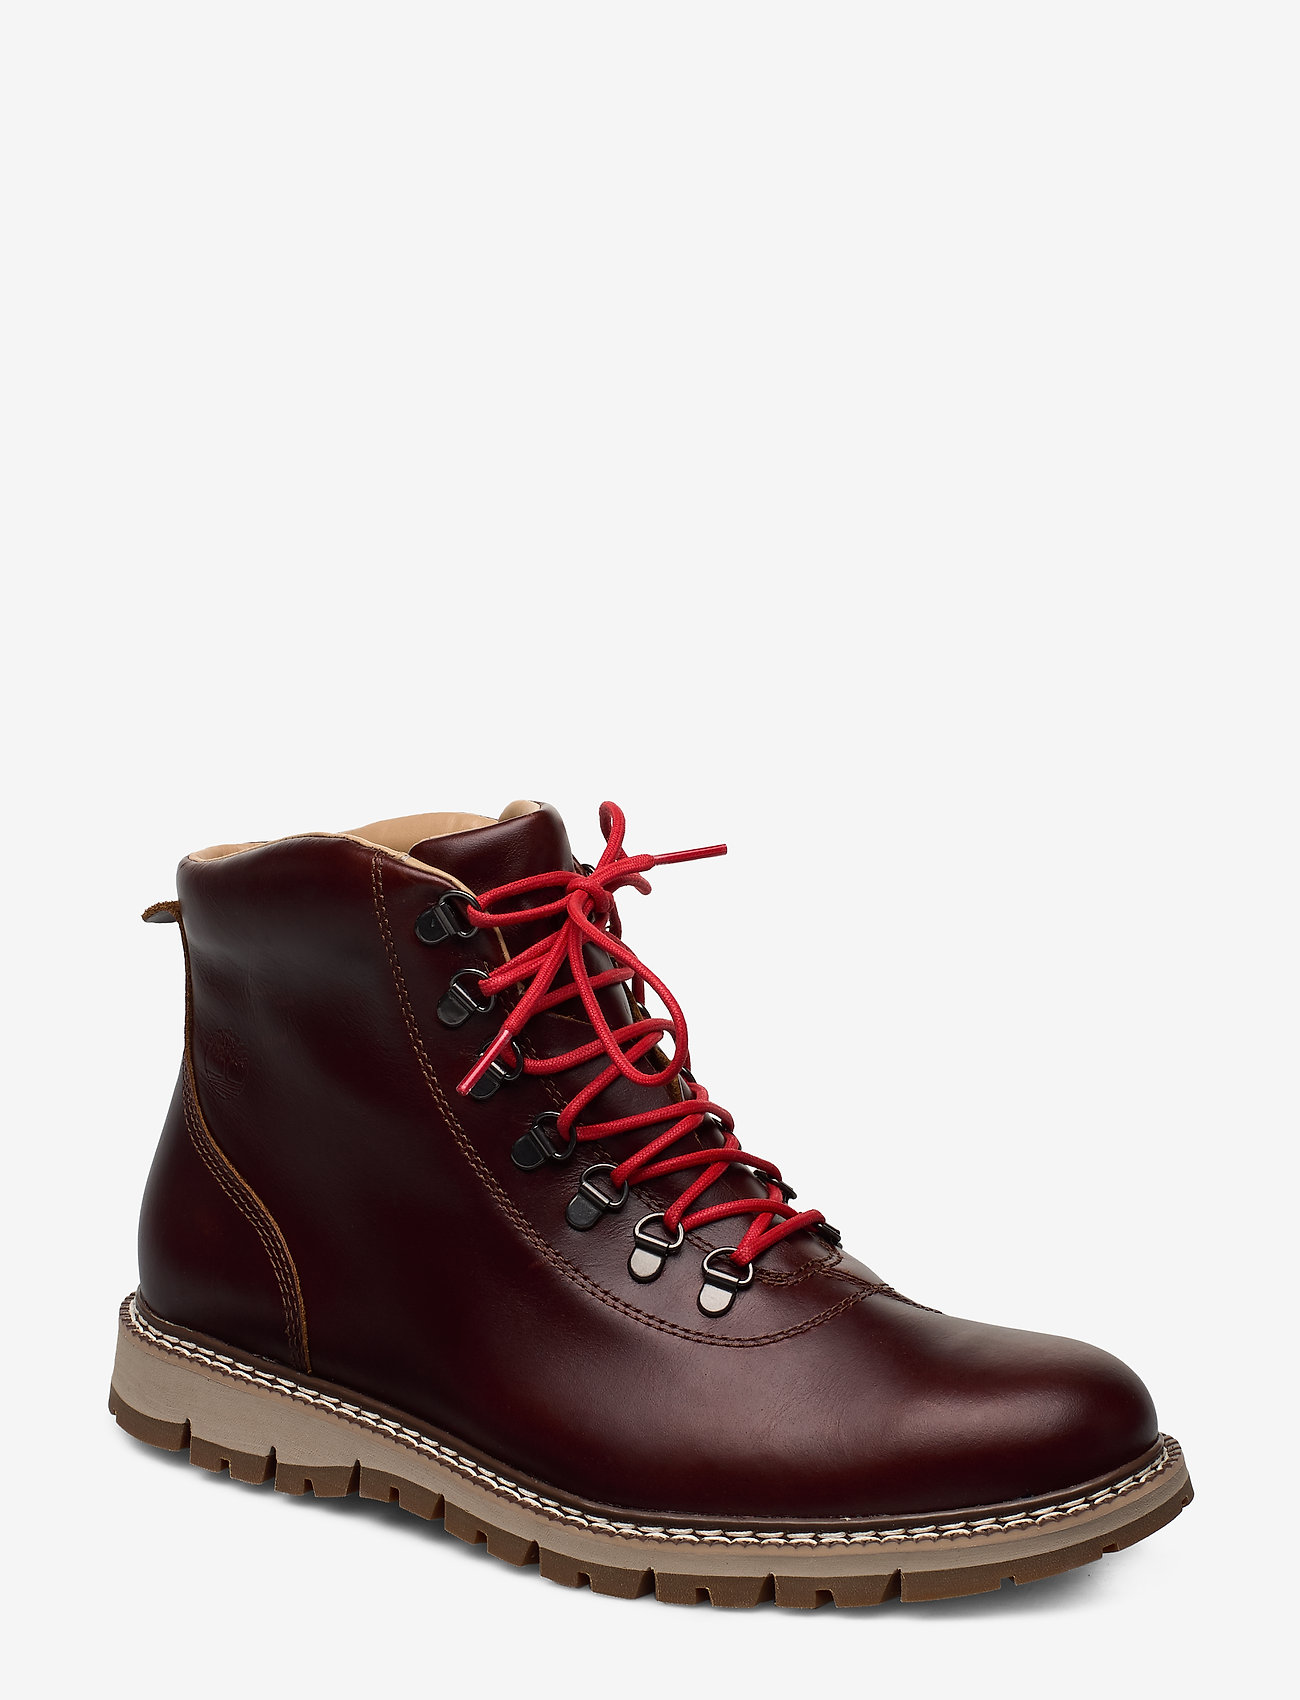 britton boots